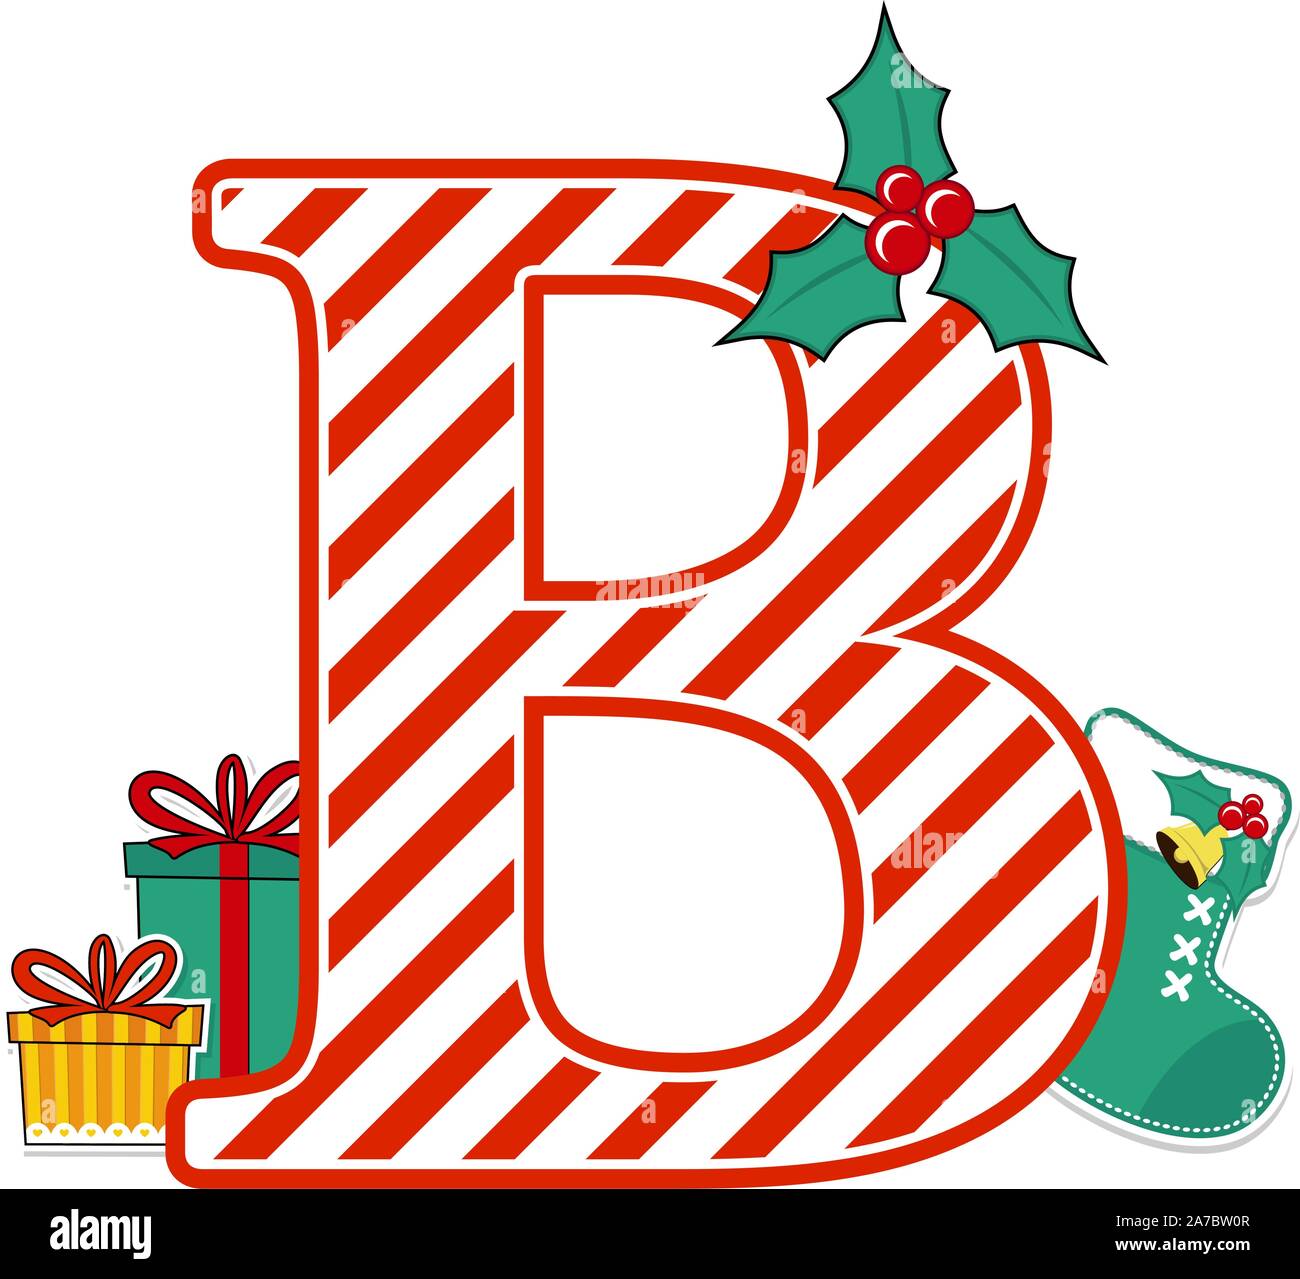 Free B - Christmas Letter stencil, pattern, template, clipart, design,  printable alphabet letter…